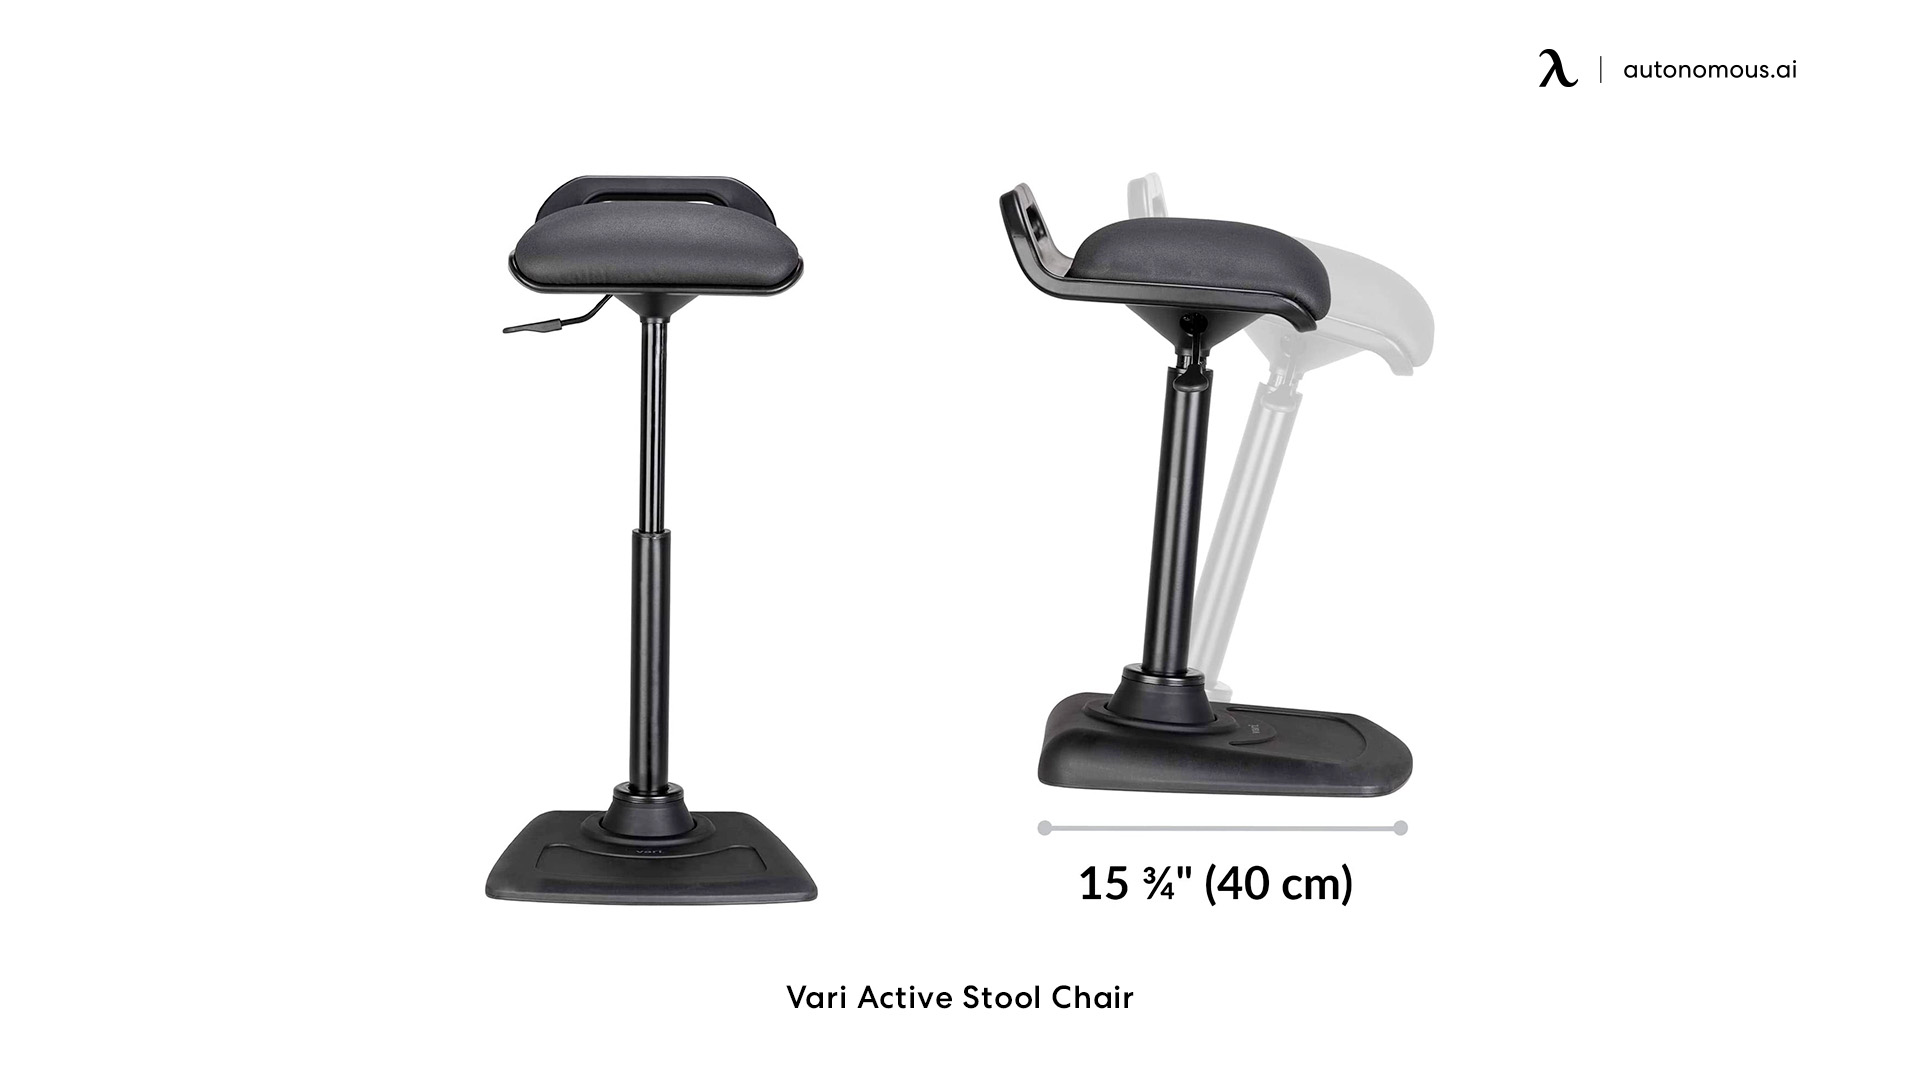 Vari Active Stool Chair